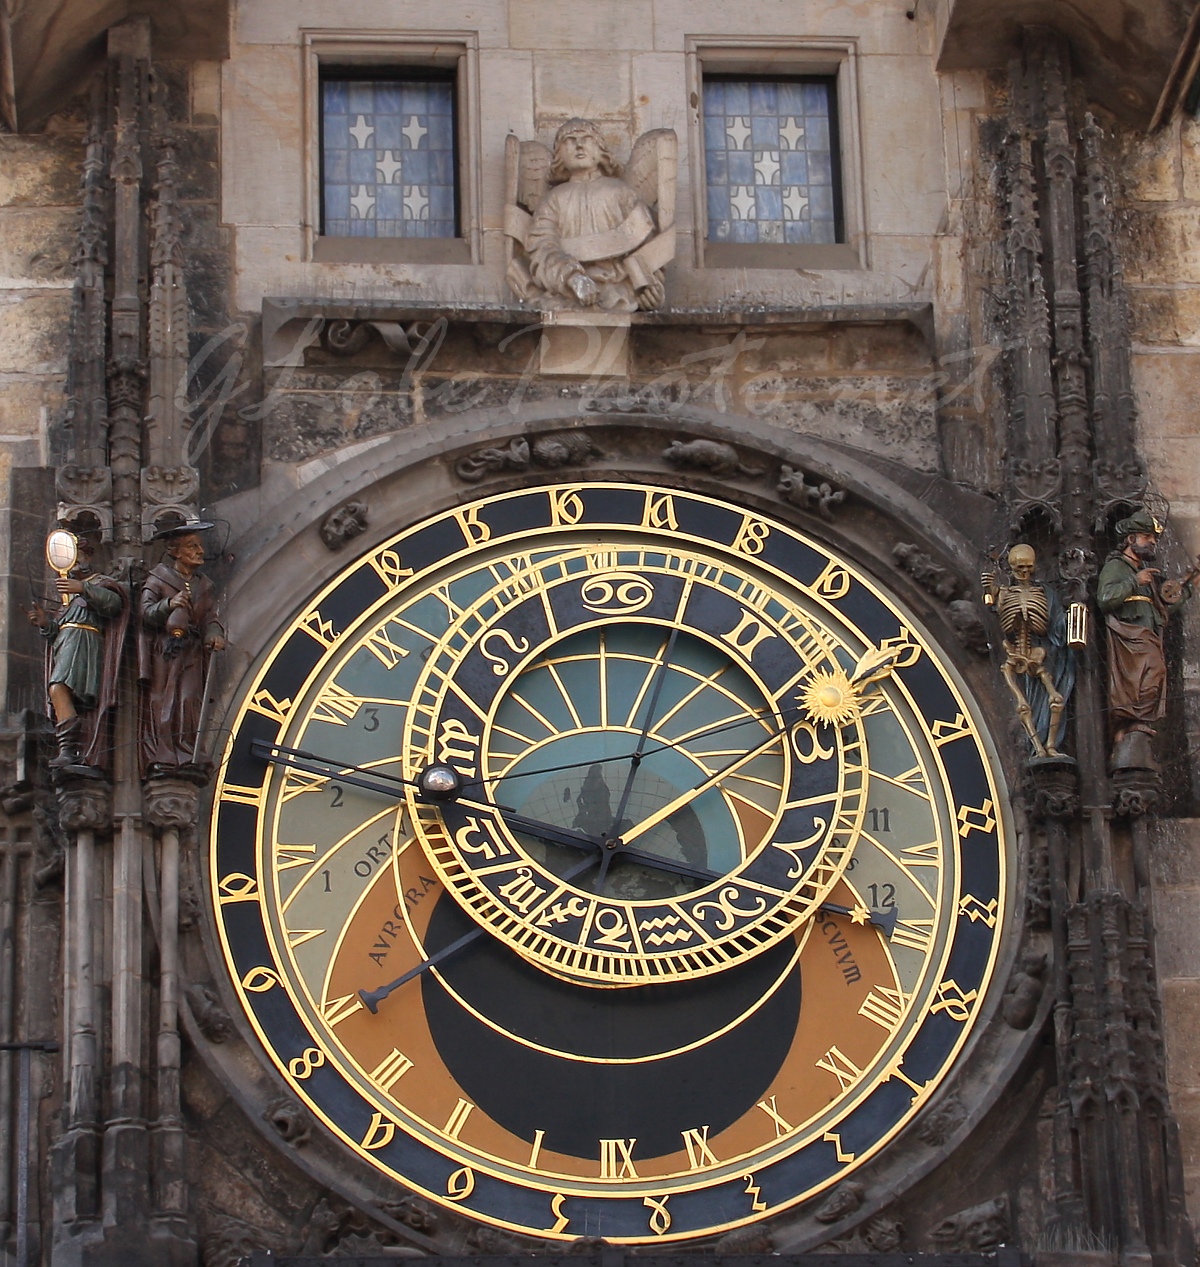 Prga, vros tr, Orloj - Prague, Old Town square, Clock